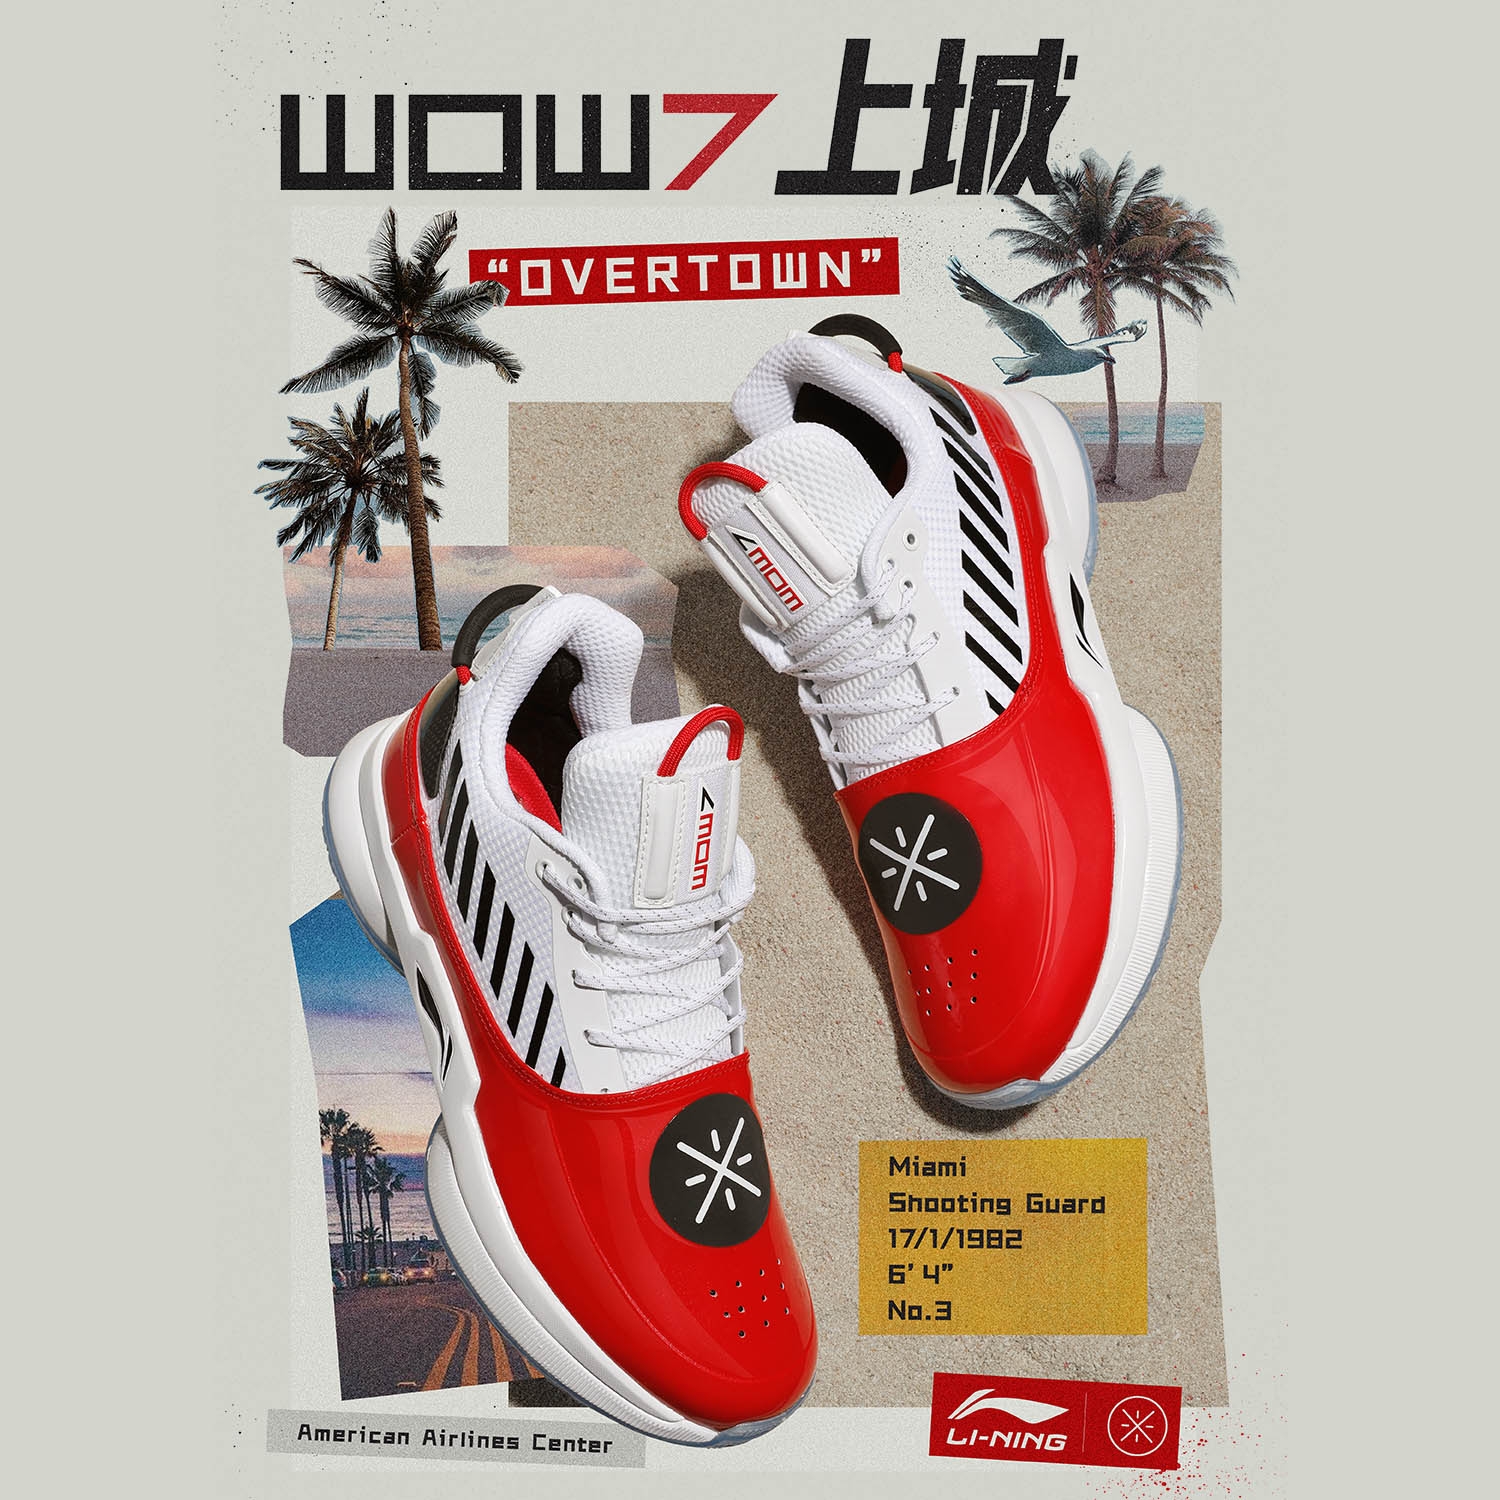 Li-Ning Way of Wade 7 Seven Basketball Shoes - "Overtown"